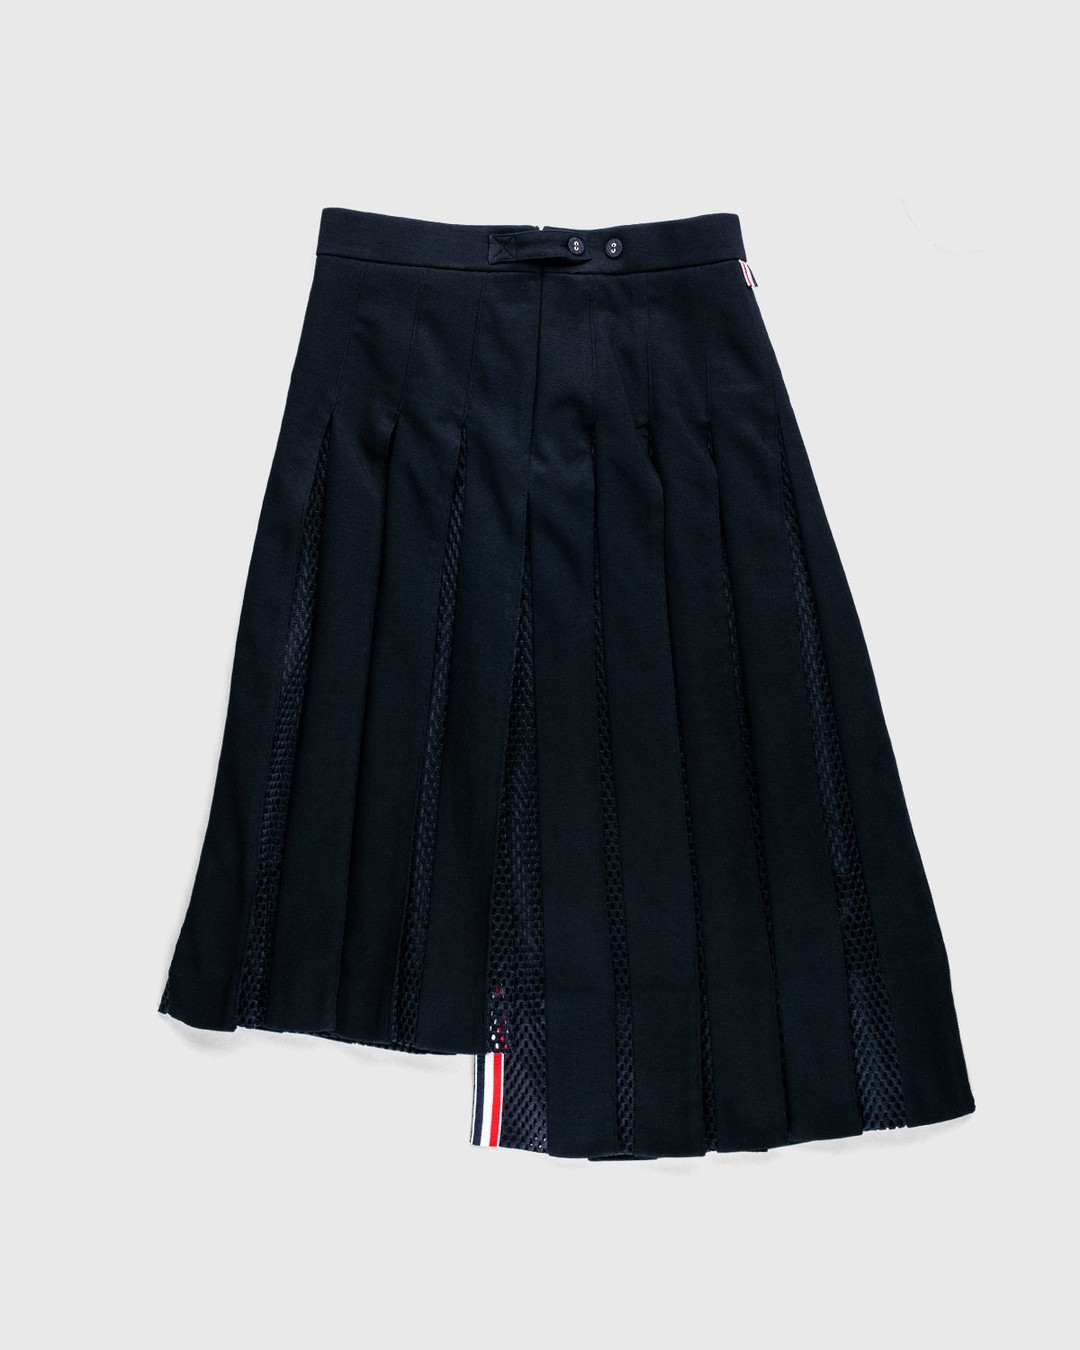 Thom Browne x Highsnobiety – Men's Pleated Mesh Skirt Black - Midi - Black - Image 3